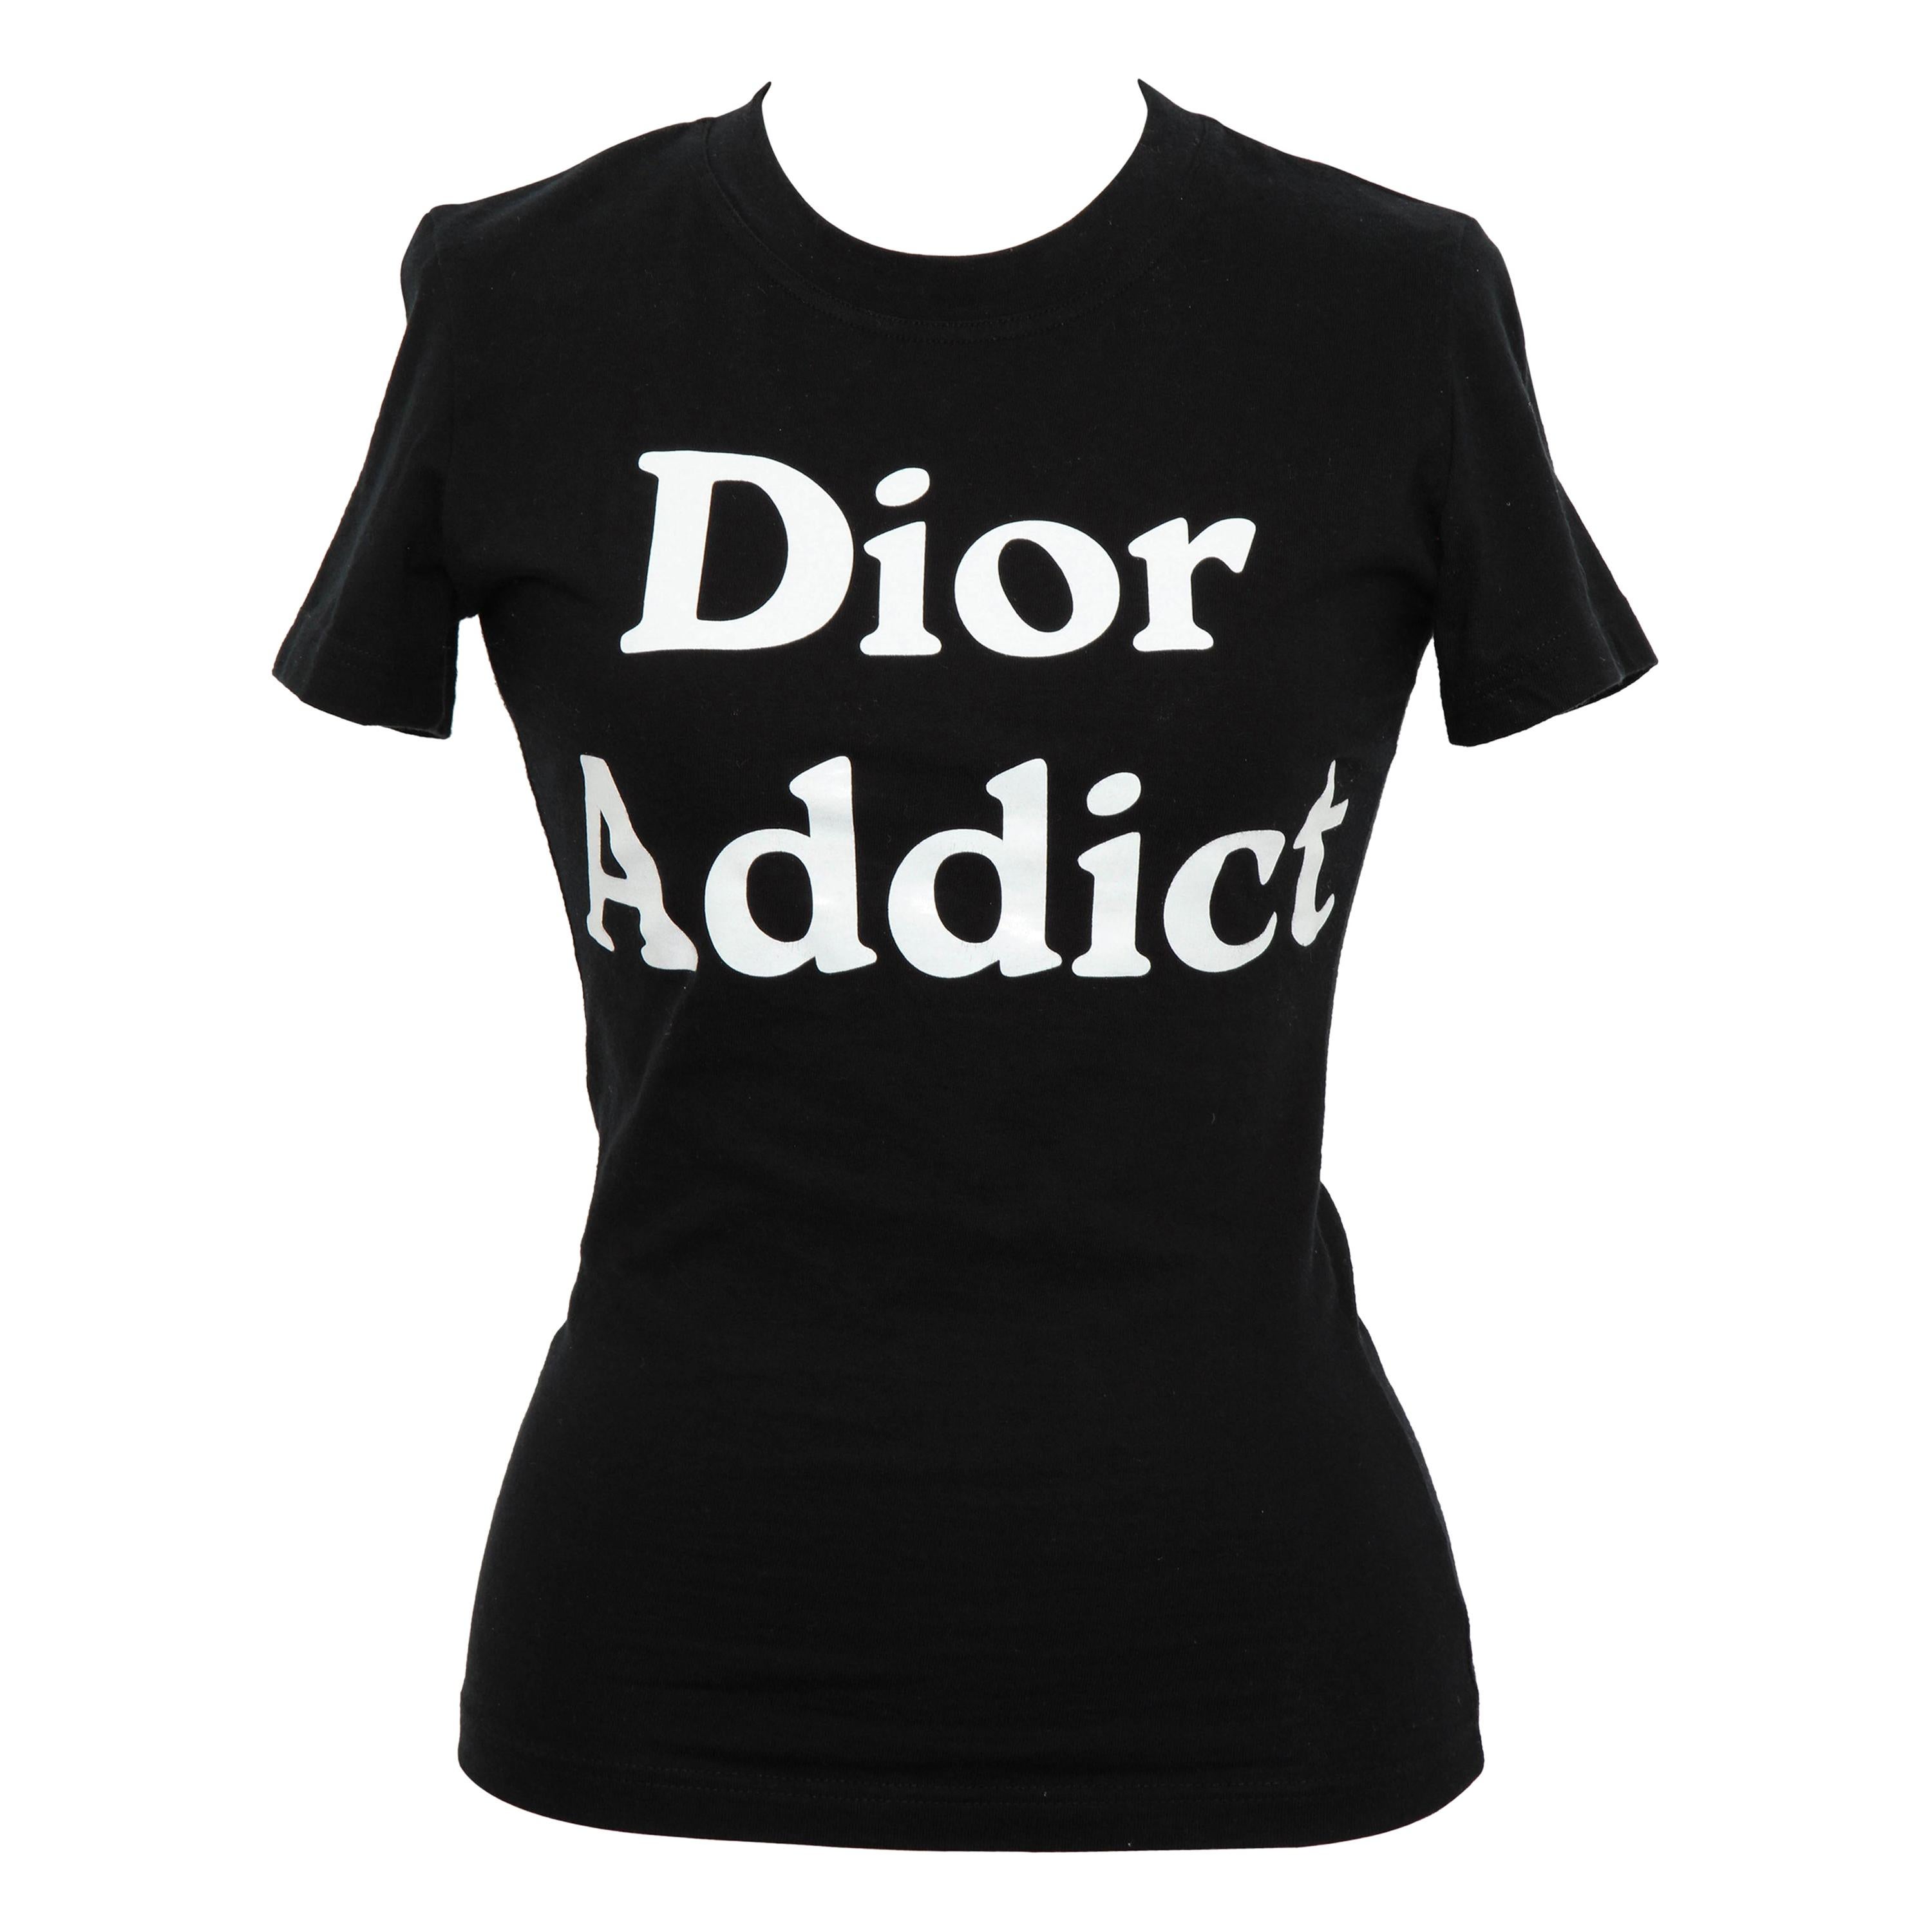 John Galliano for Christian Dior "Dior Addict" Tank Top T-Shirt For Sale